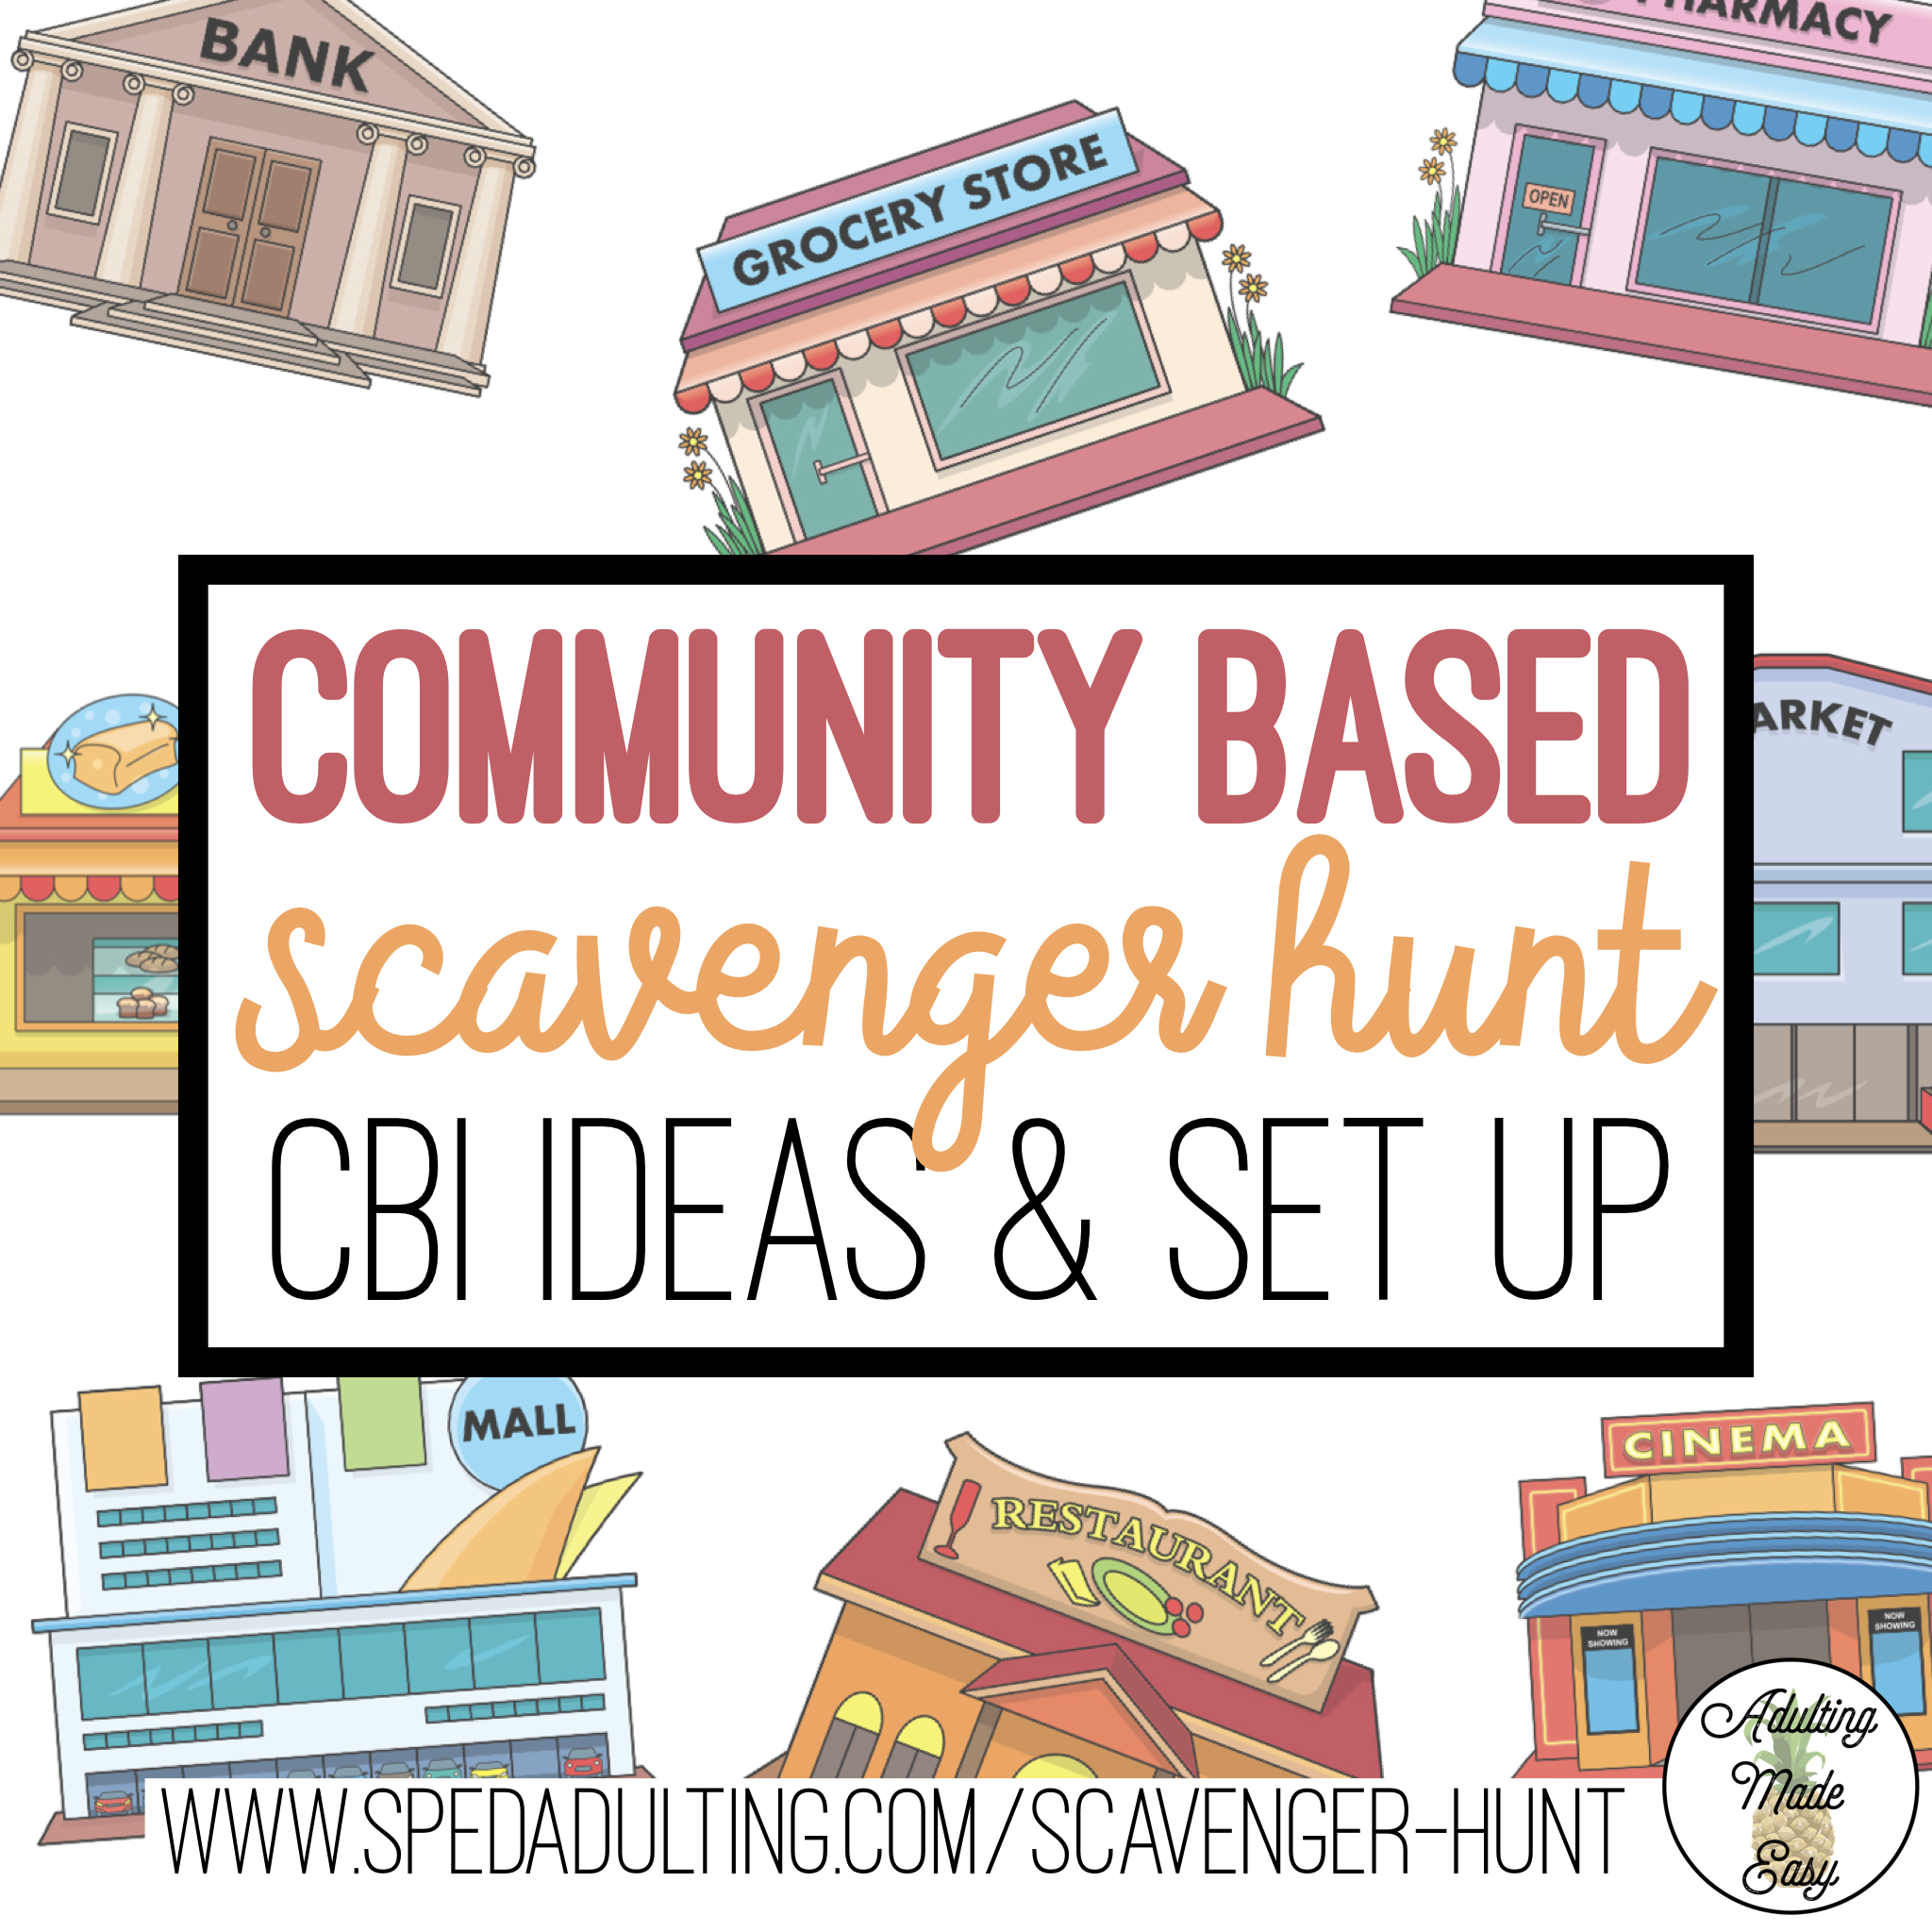 BLOG: Community based scavenger hunt CBI ideas & set up